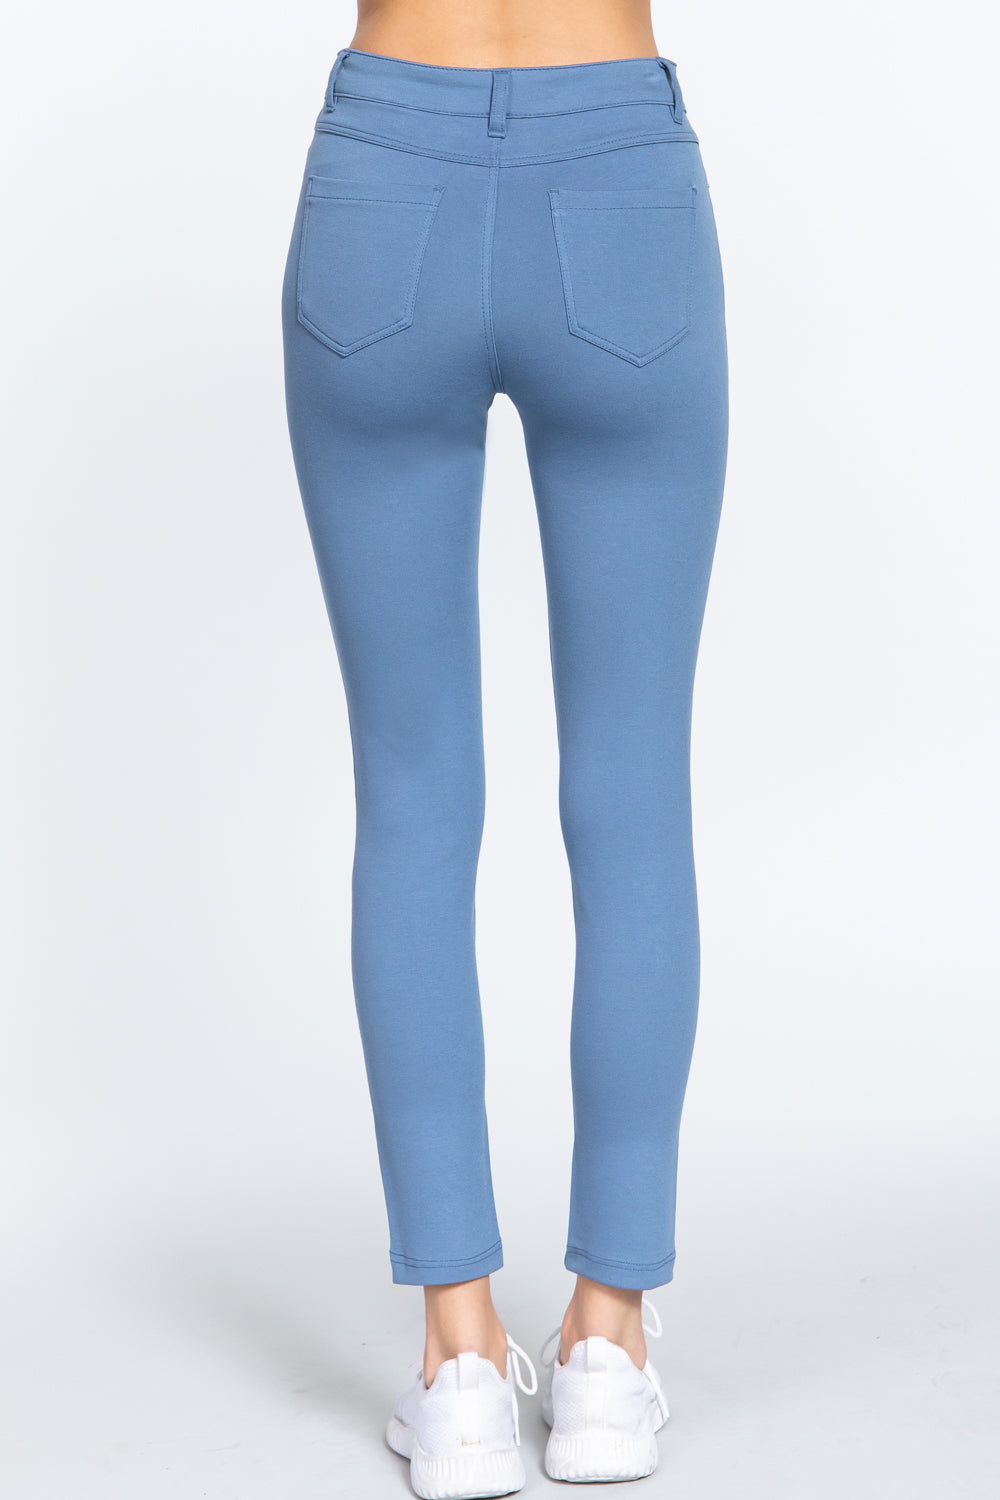 5-pockets Shape Skinny Ponte Mid-rise Pants - Love It Clothing